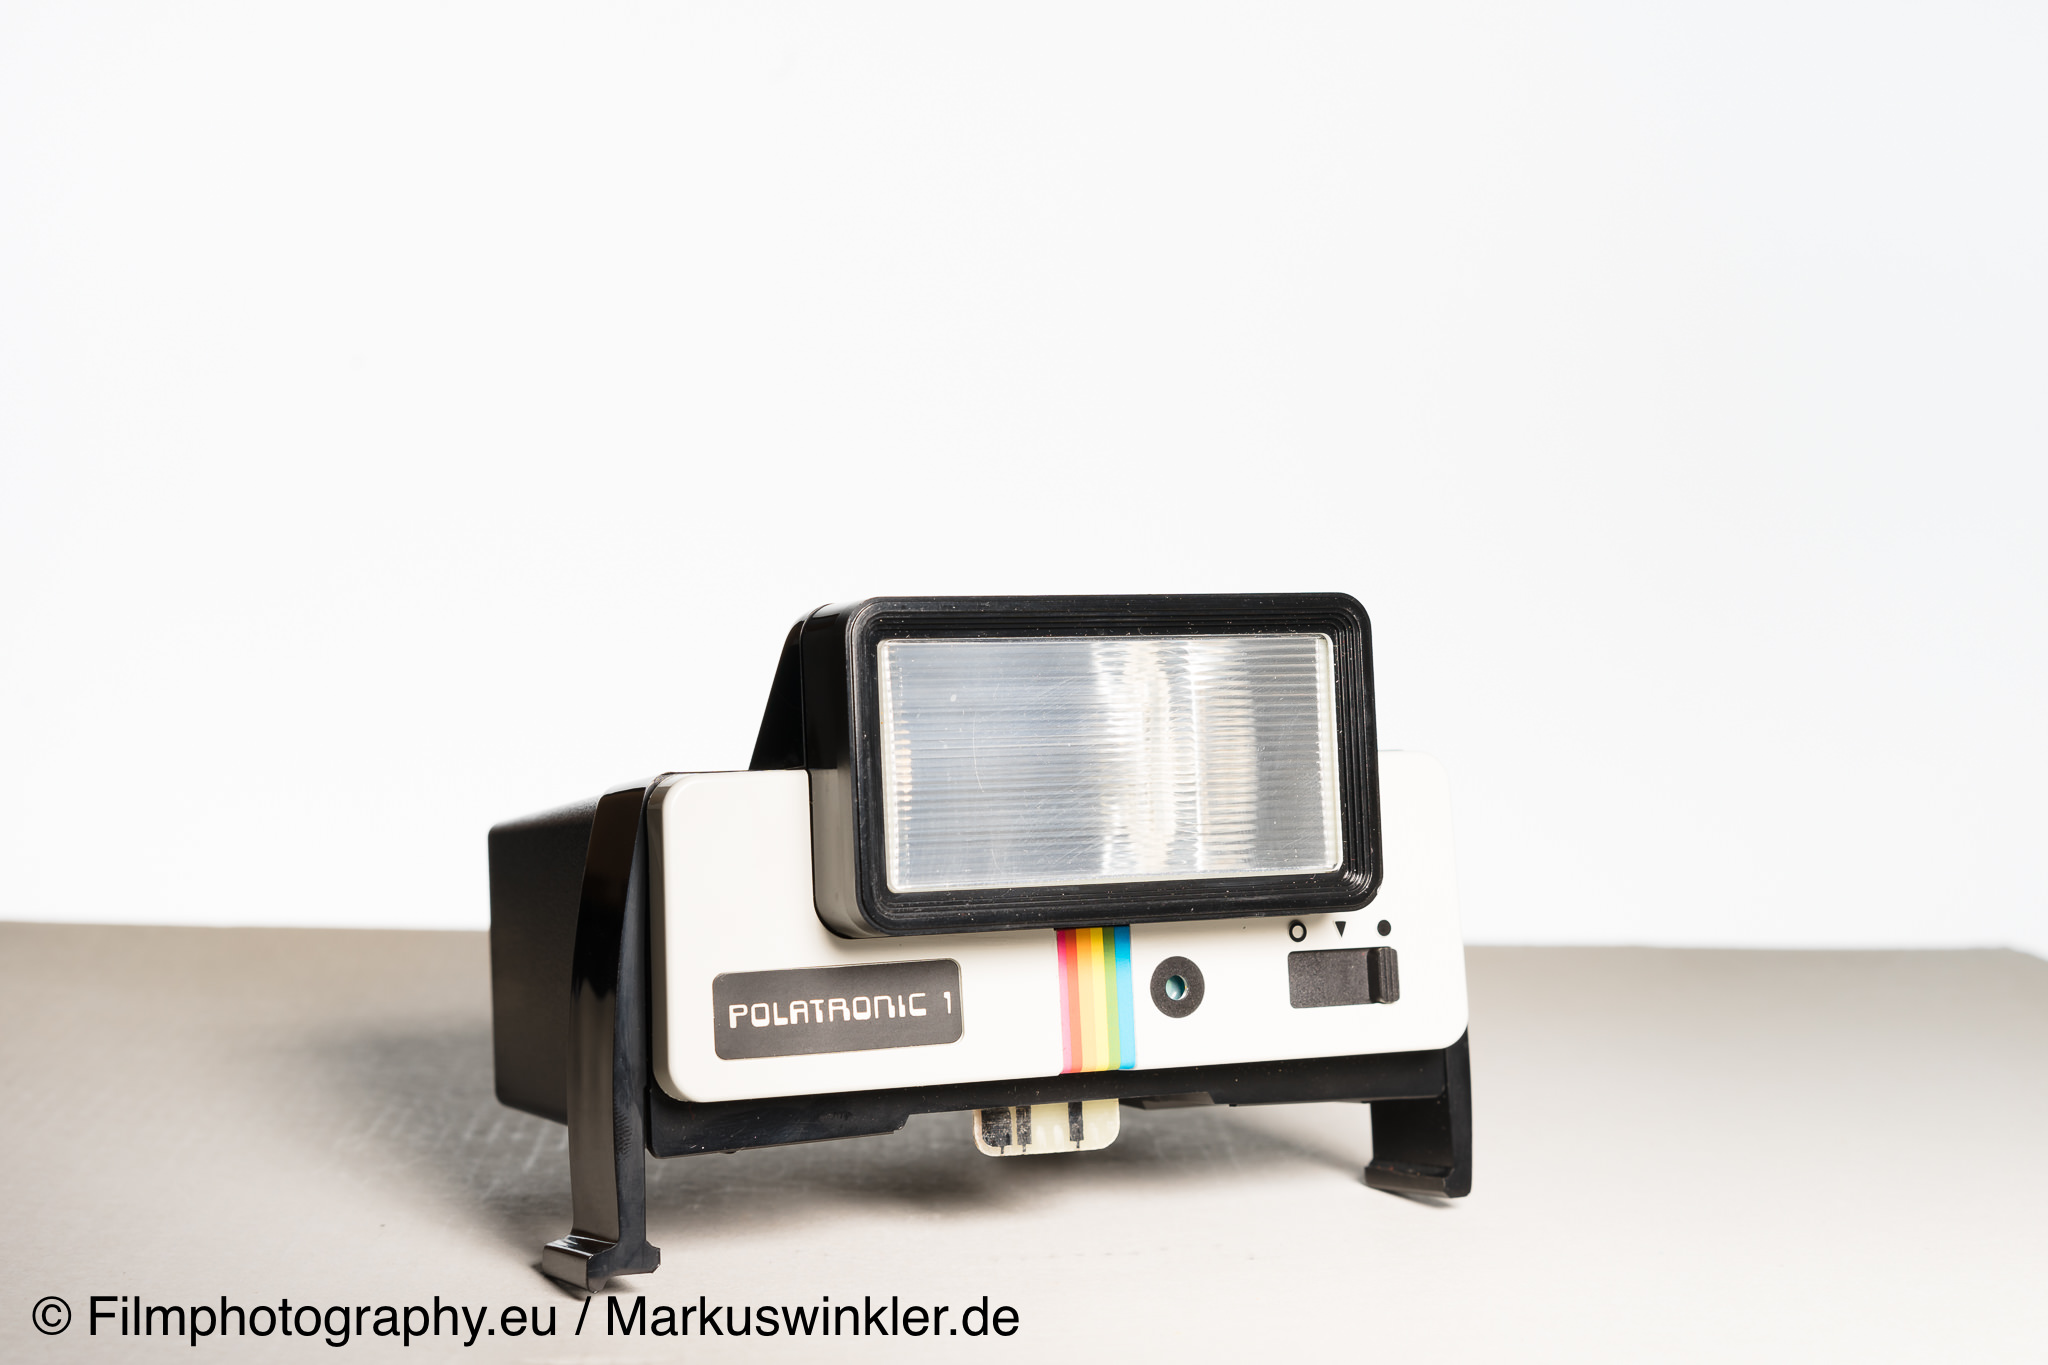 Test du Polaroid Land Camera 1000 - Instamaniac